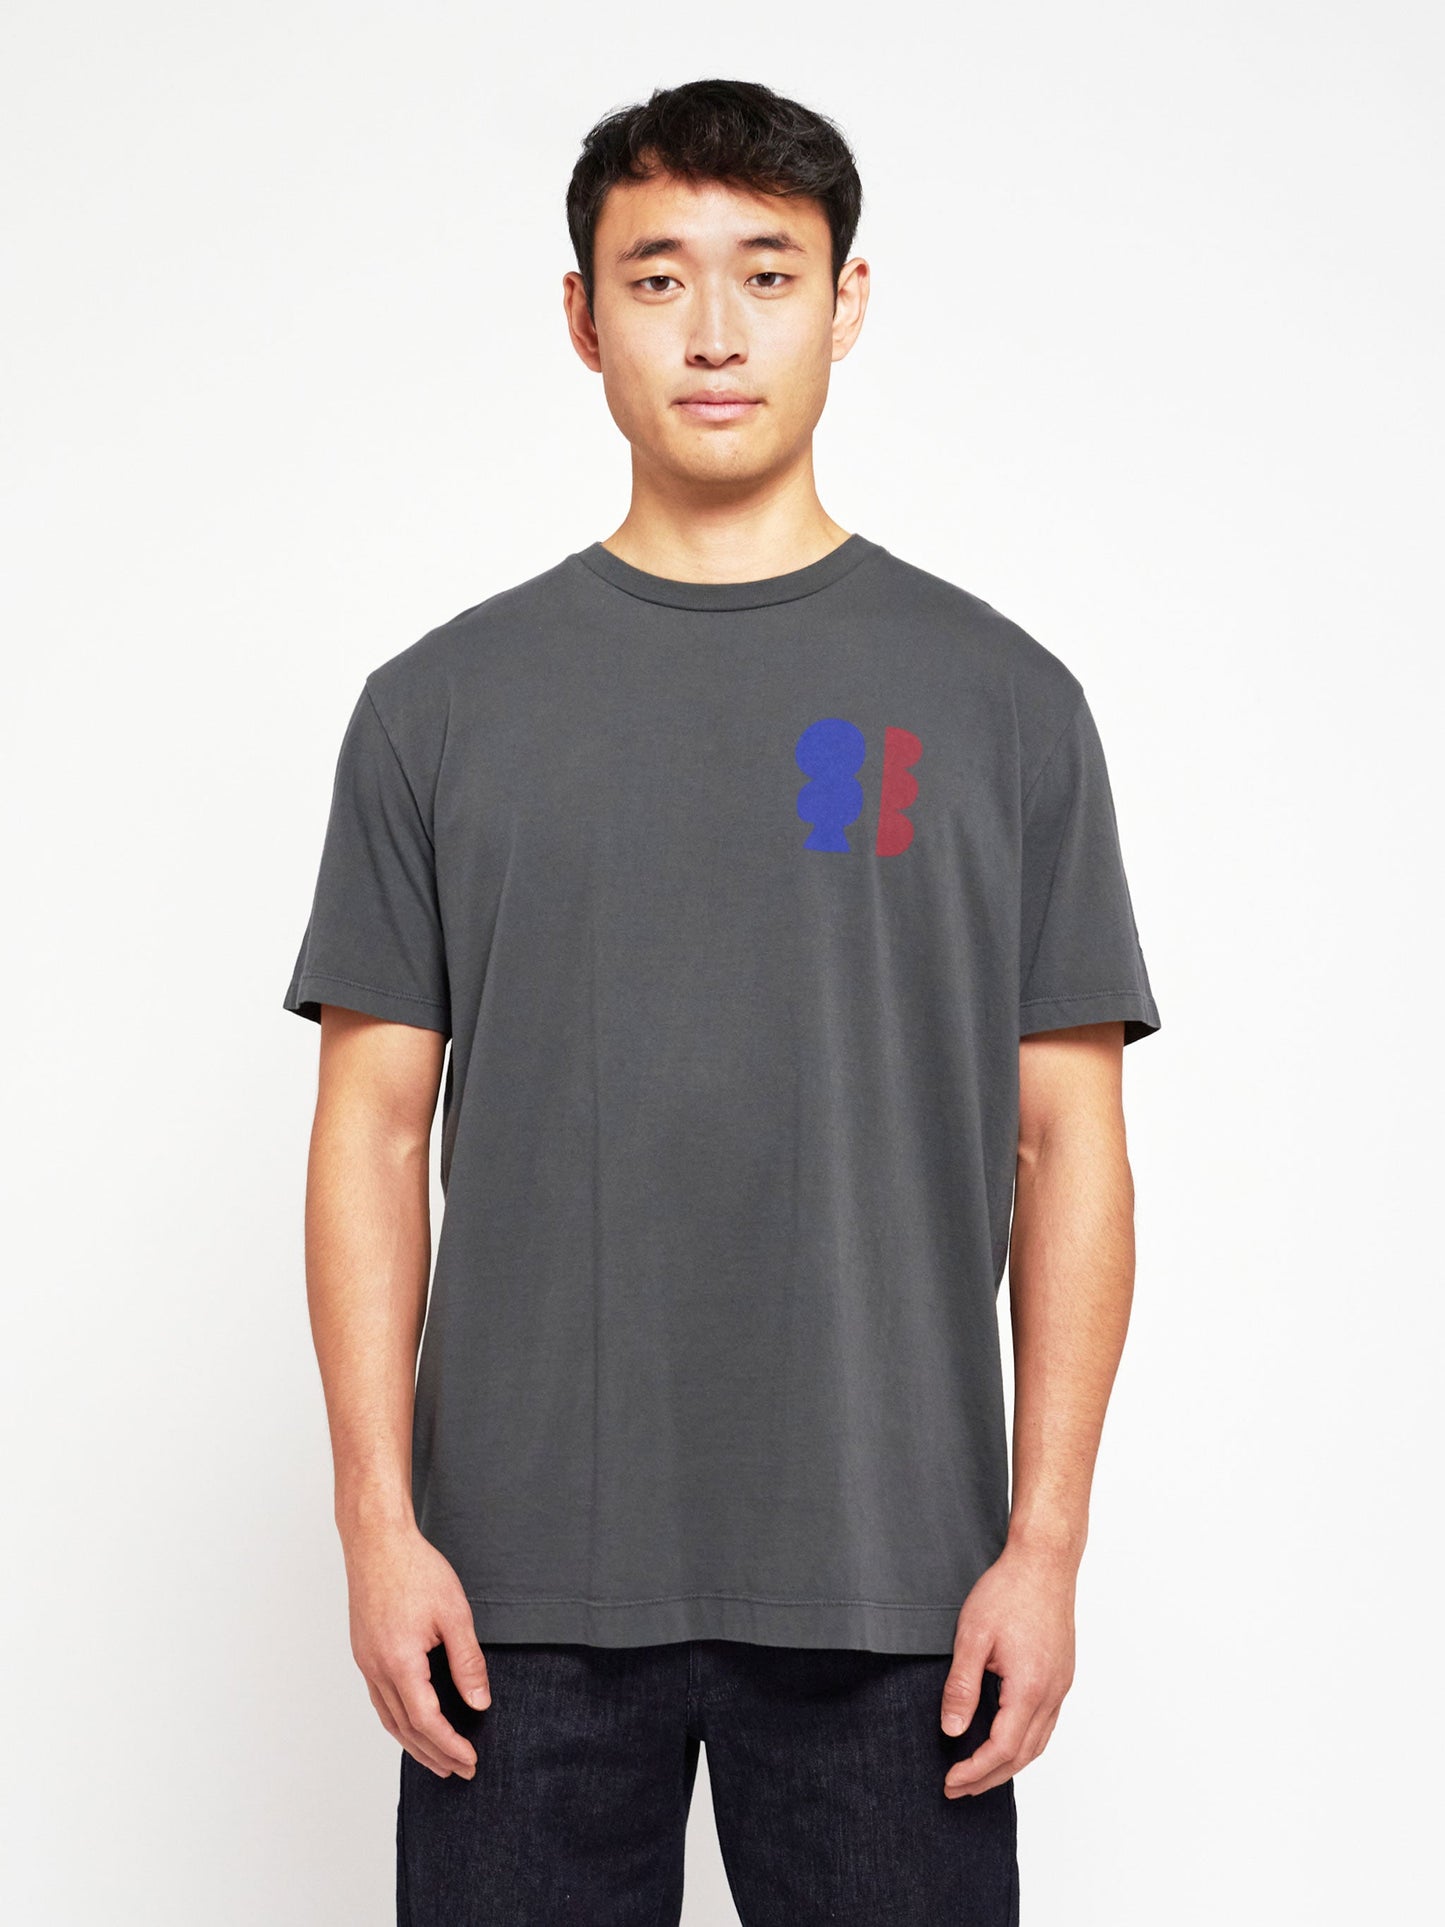 Mixed mold unisex T-shirt